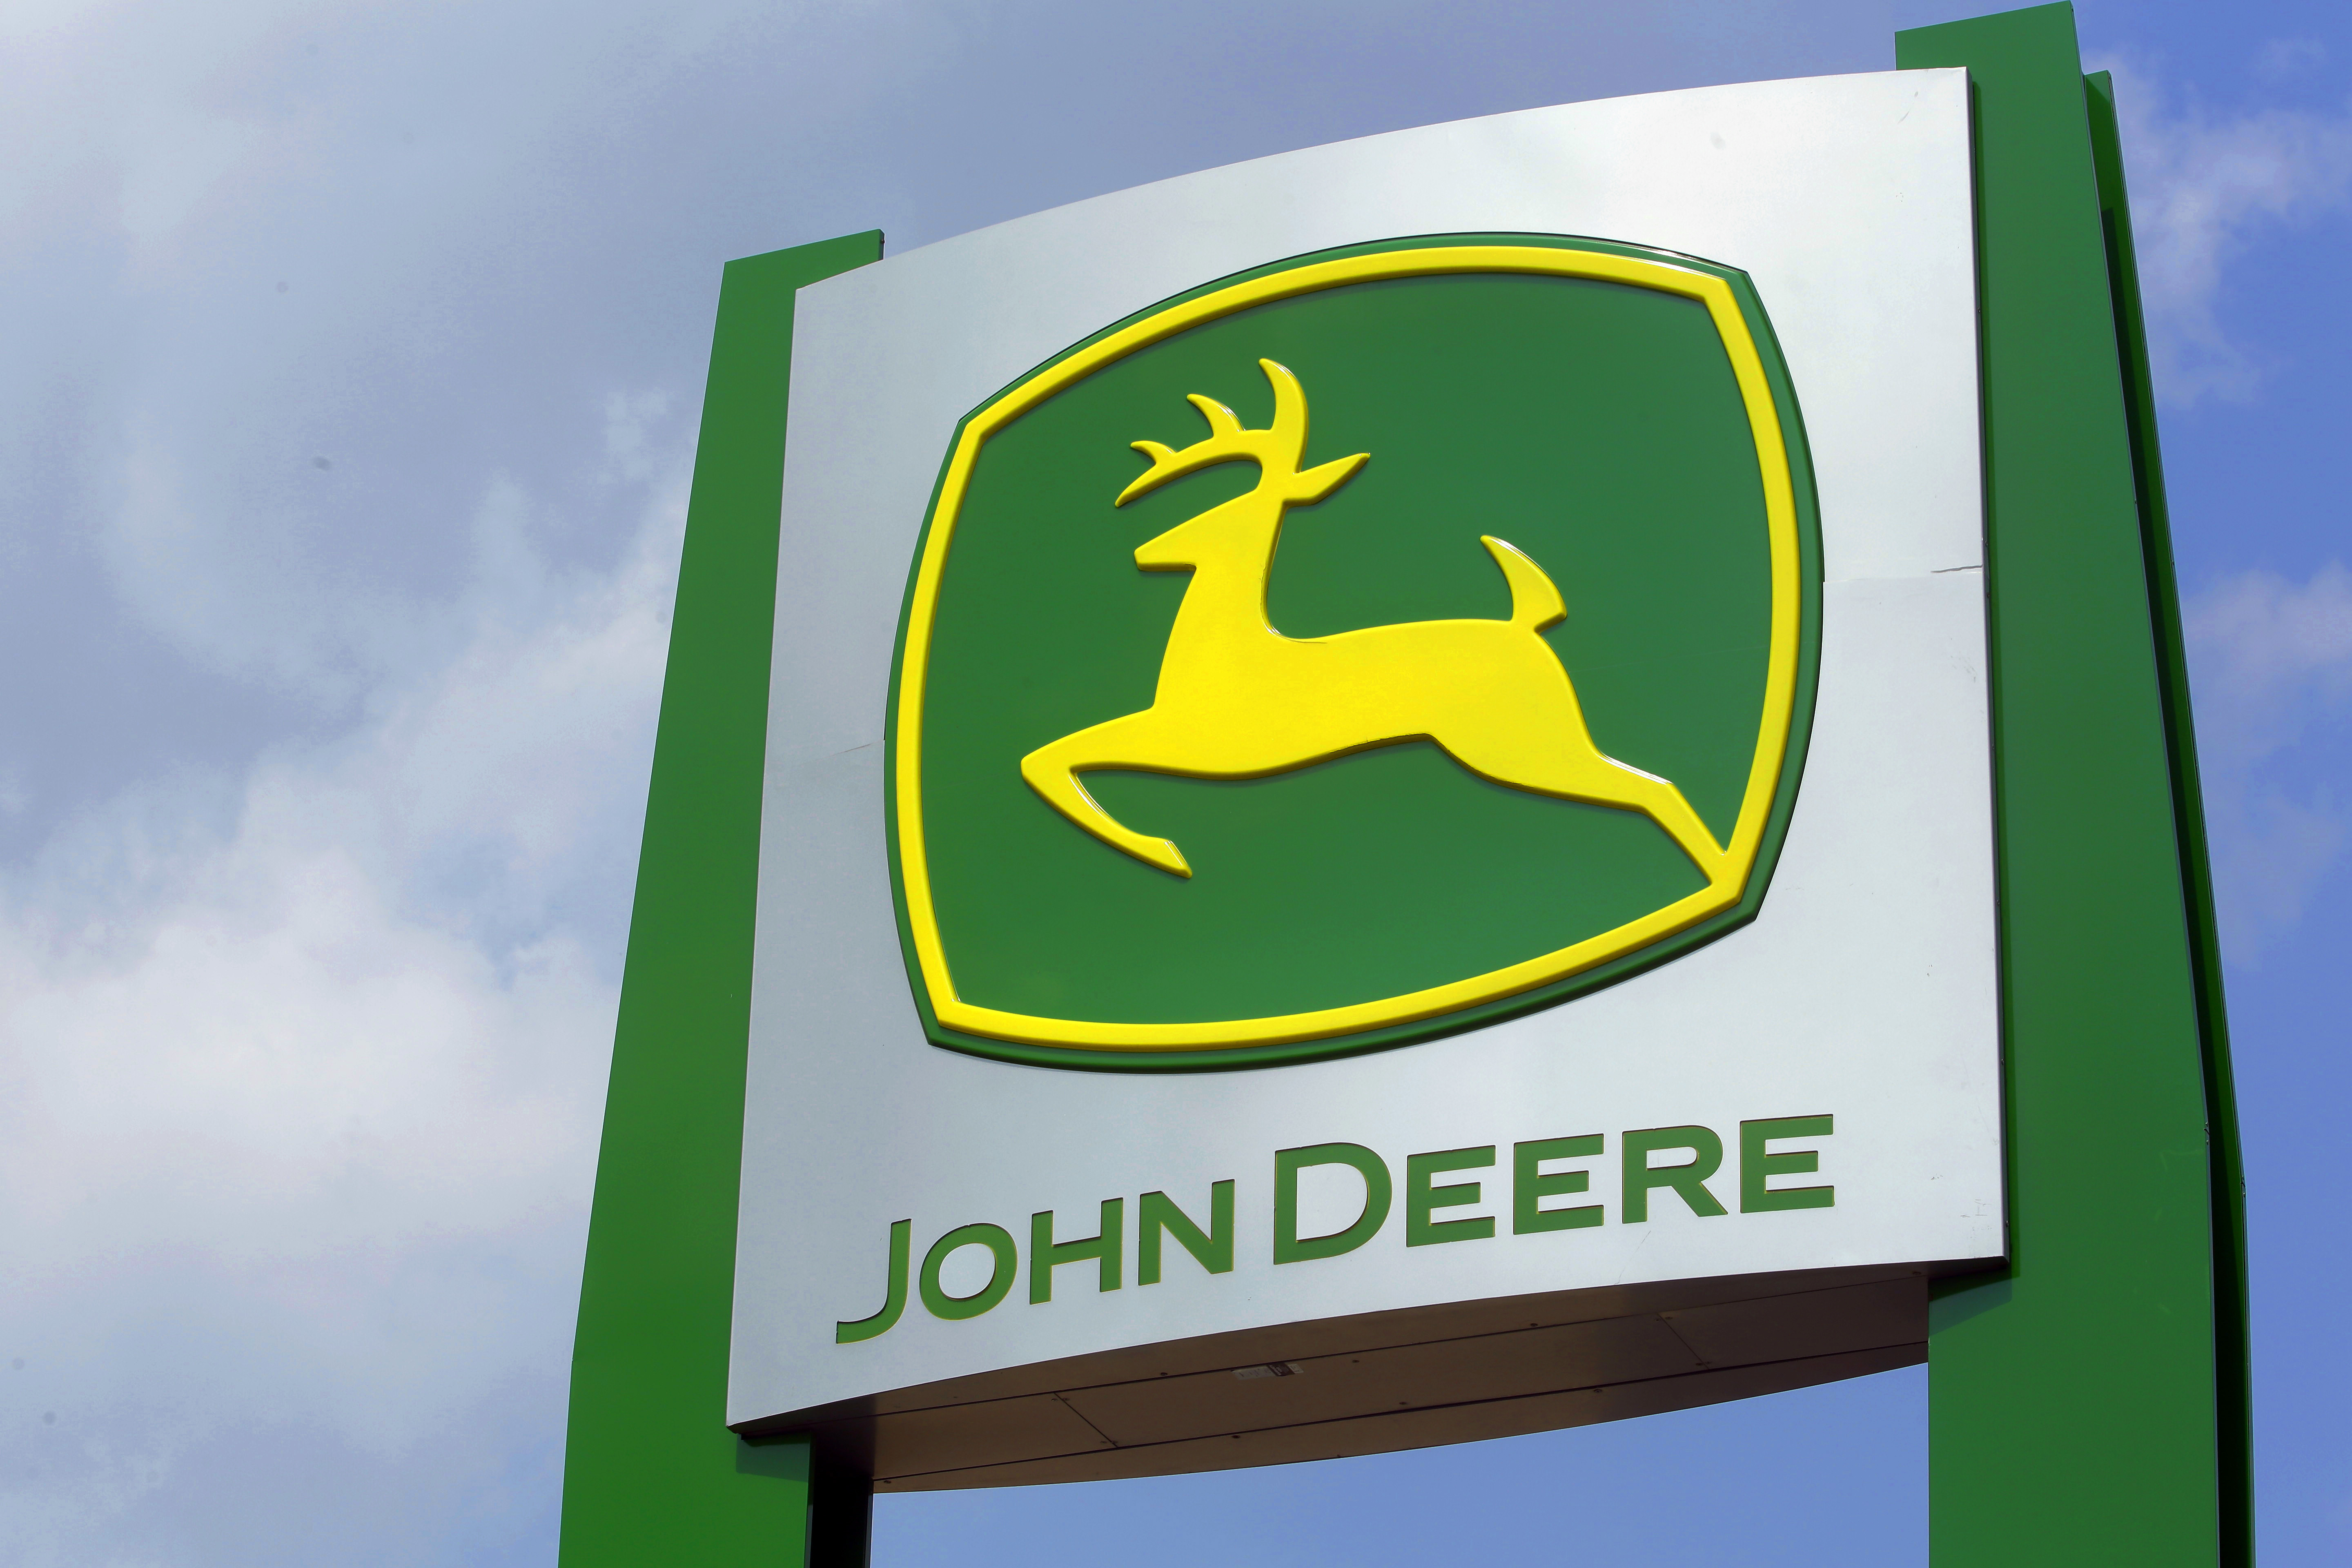 John Deere Harvester Works announces indefinite layoffs in Illinois